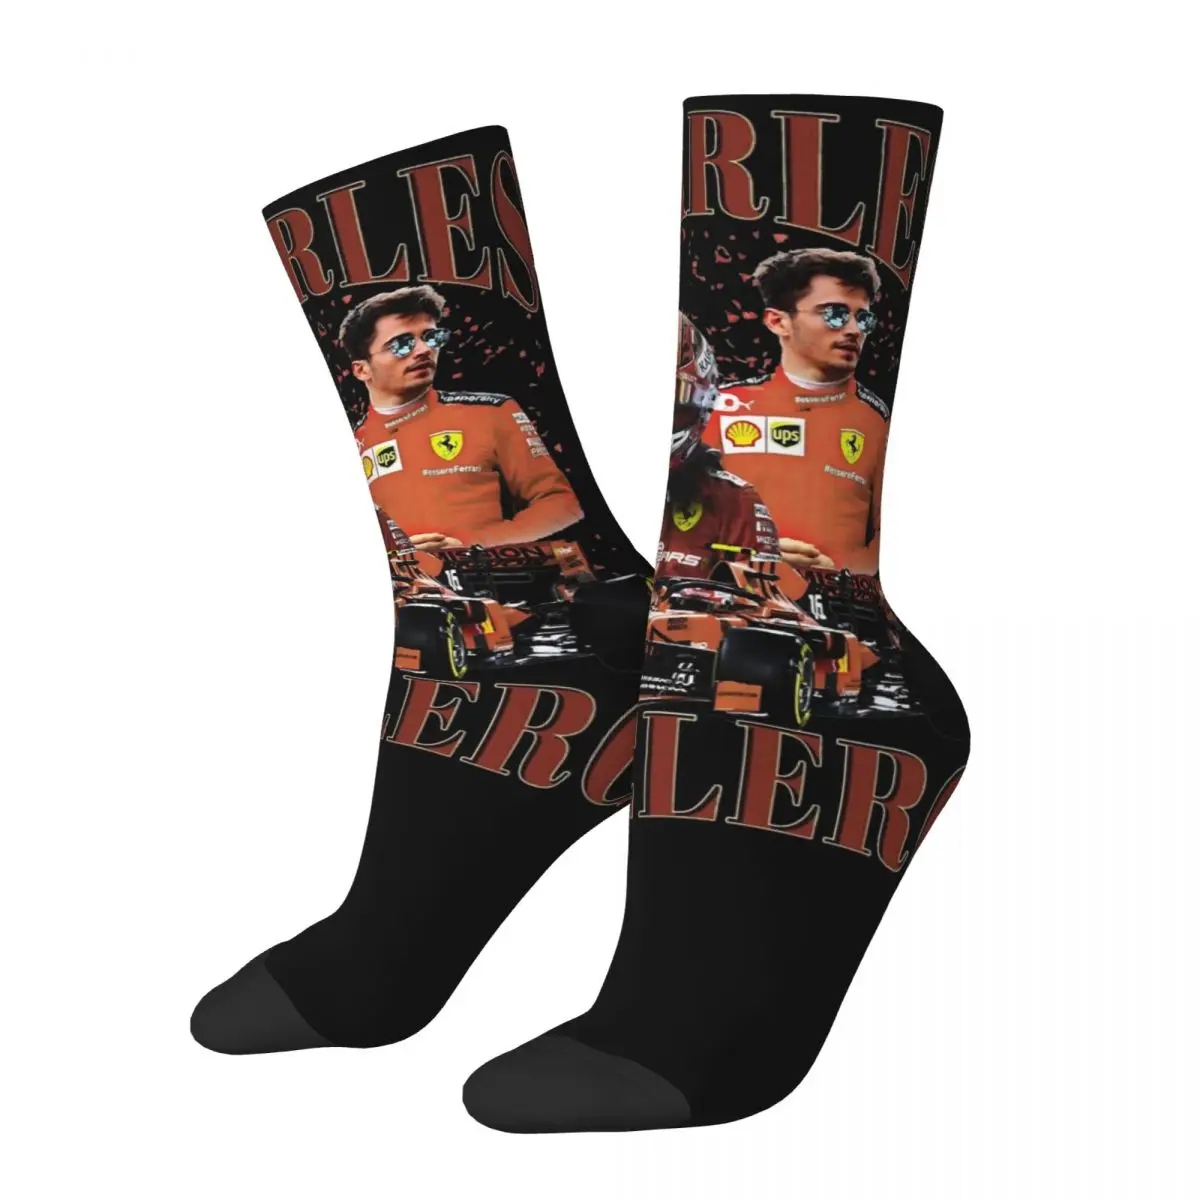 

Men's Women's Racer Charles Leclerc Victory Racing Race Socks Cute Funny Happy Socks Novelty Accessories Middle Tube Crew Socks